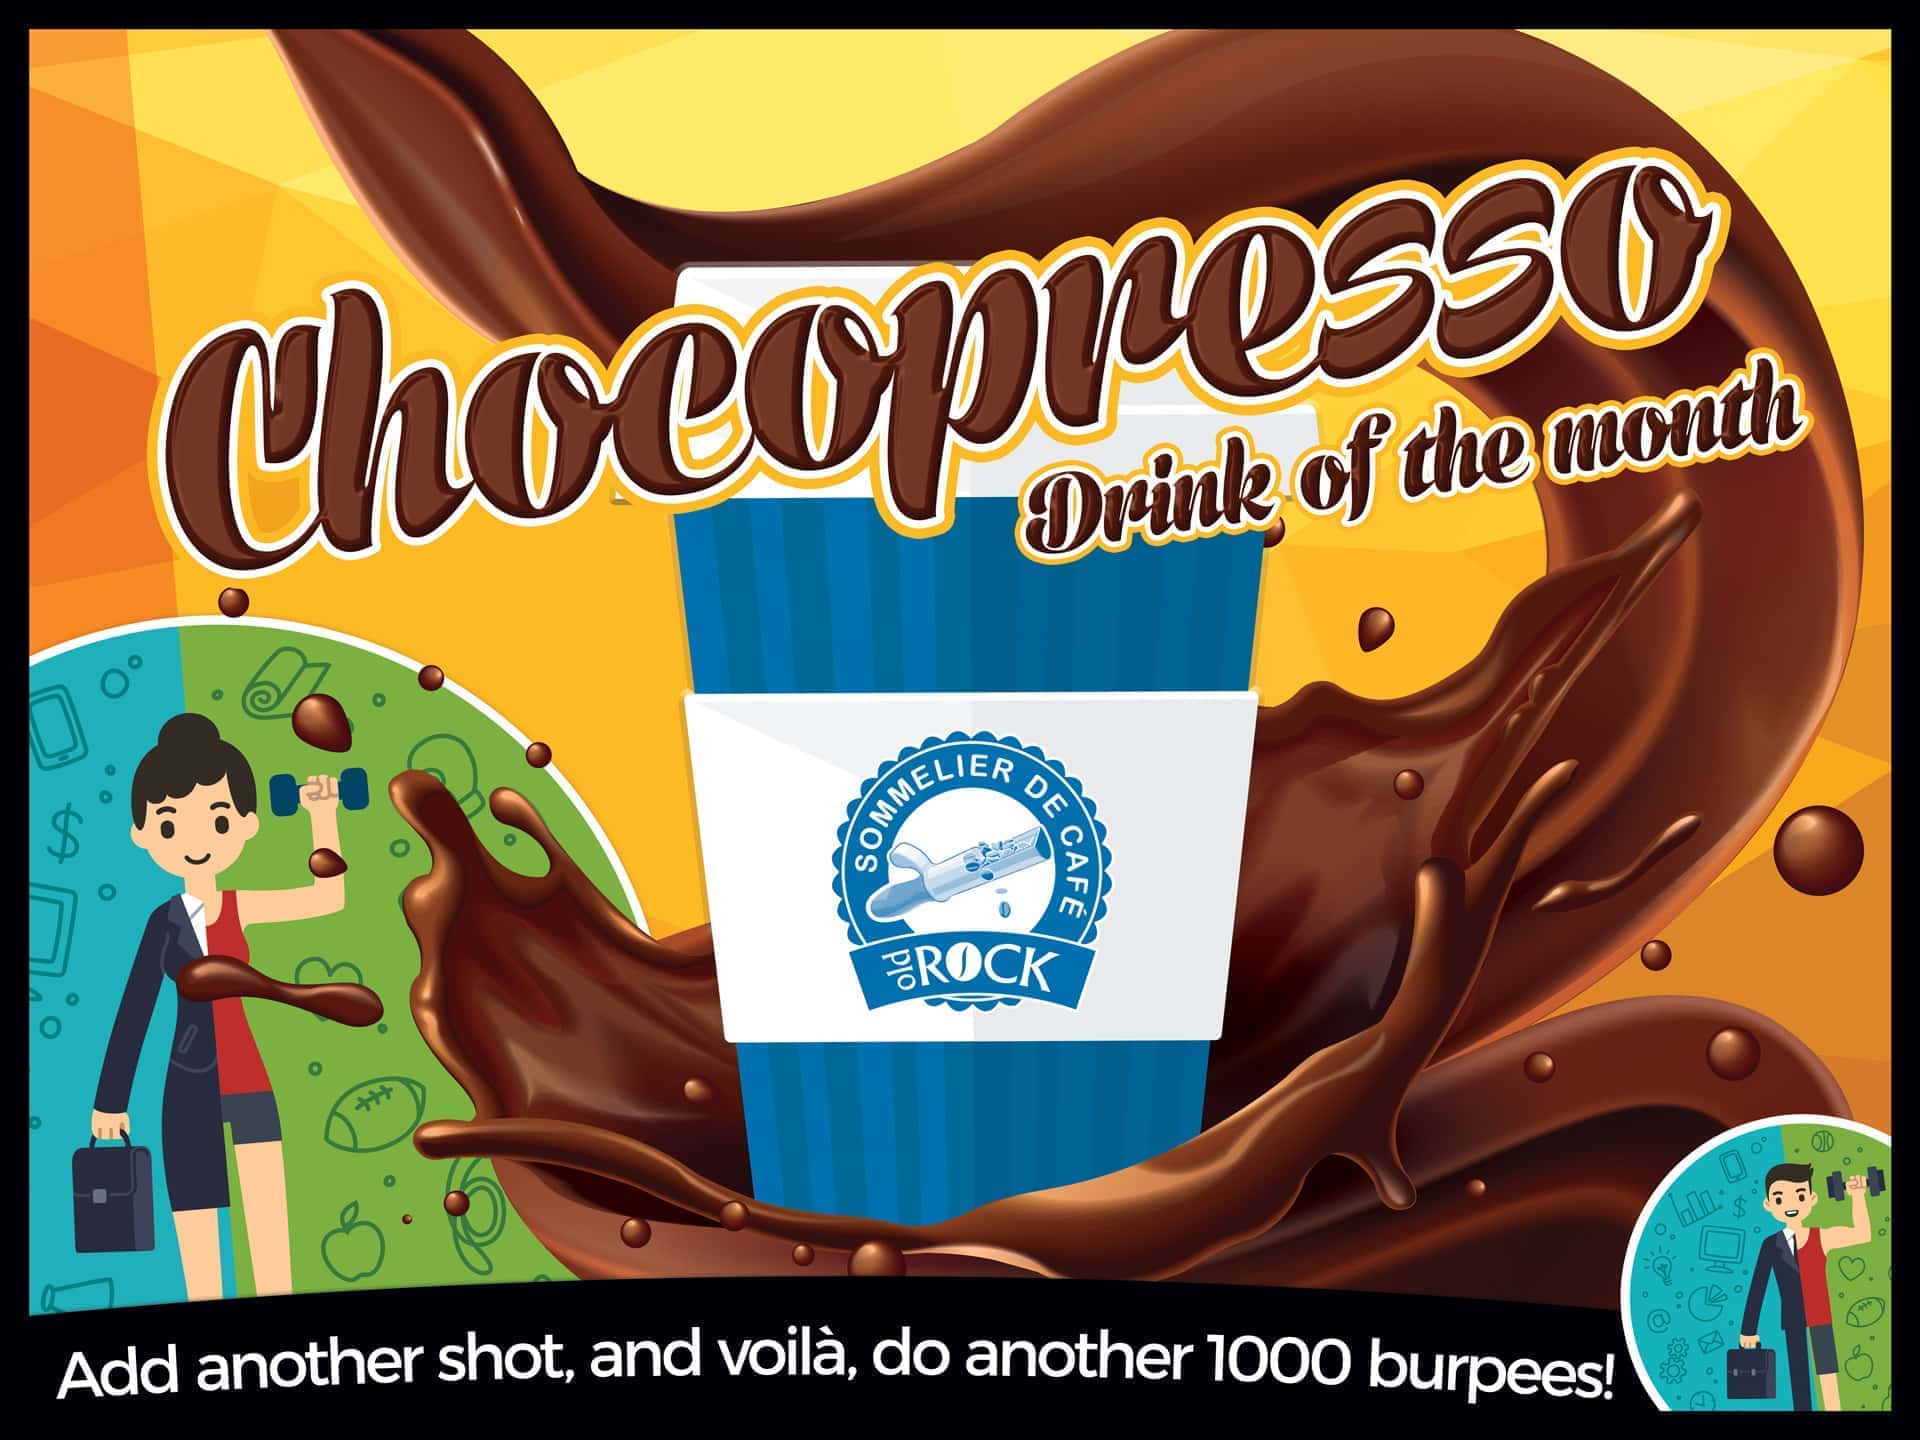 Chocopresso